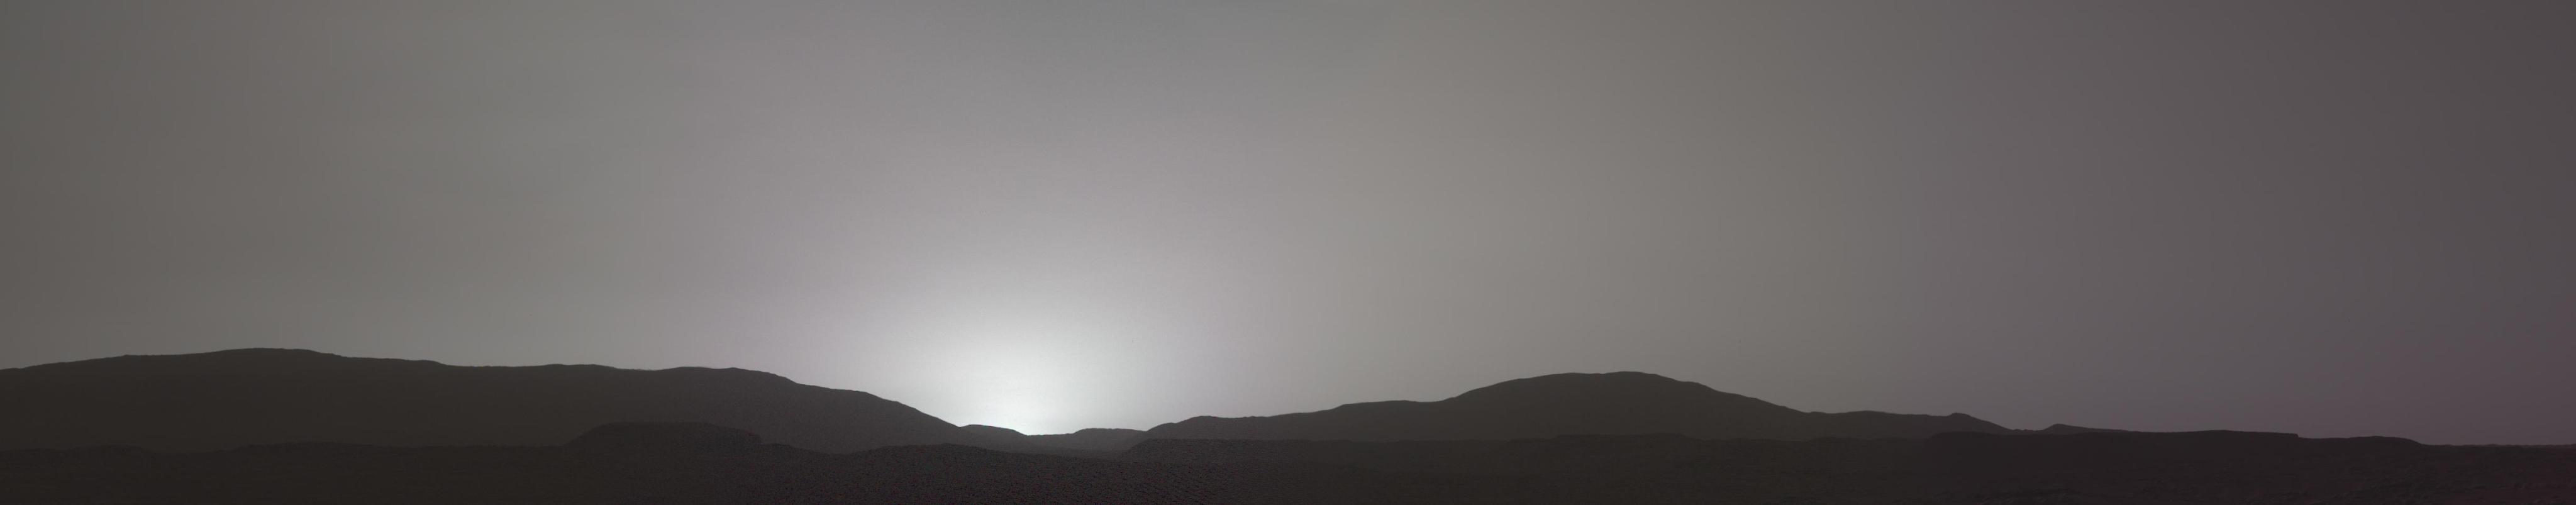 The sun sets behind hills on Mars.